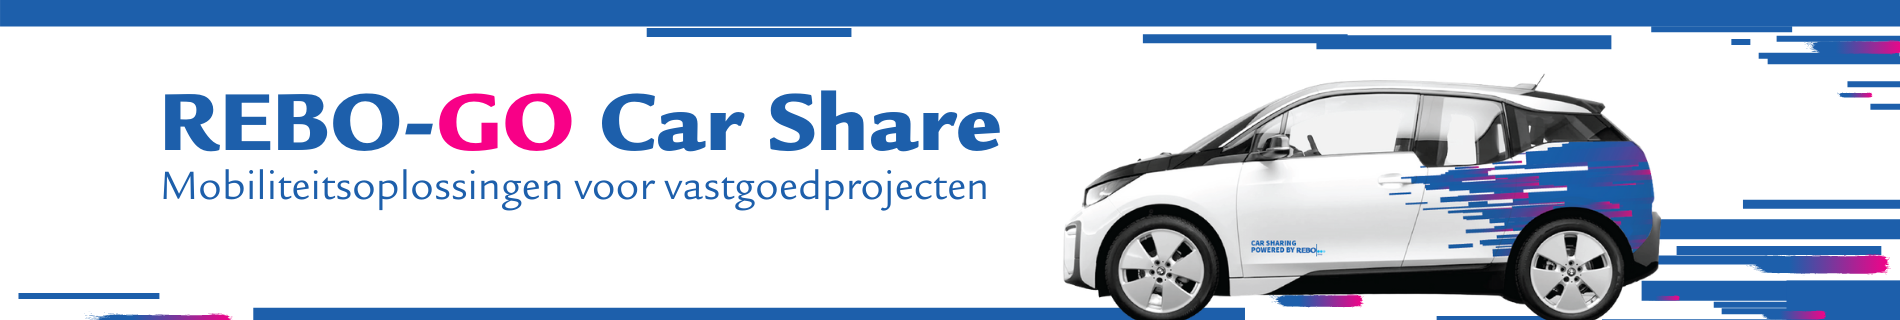 REBO-GO Car Share FB (1900 x 320 px) (1)